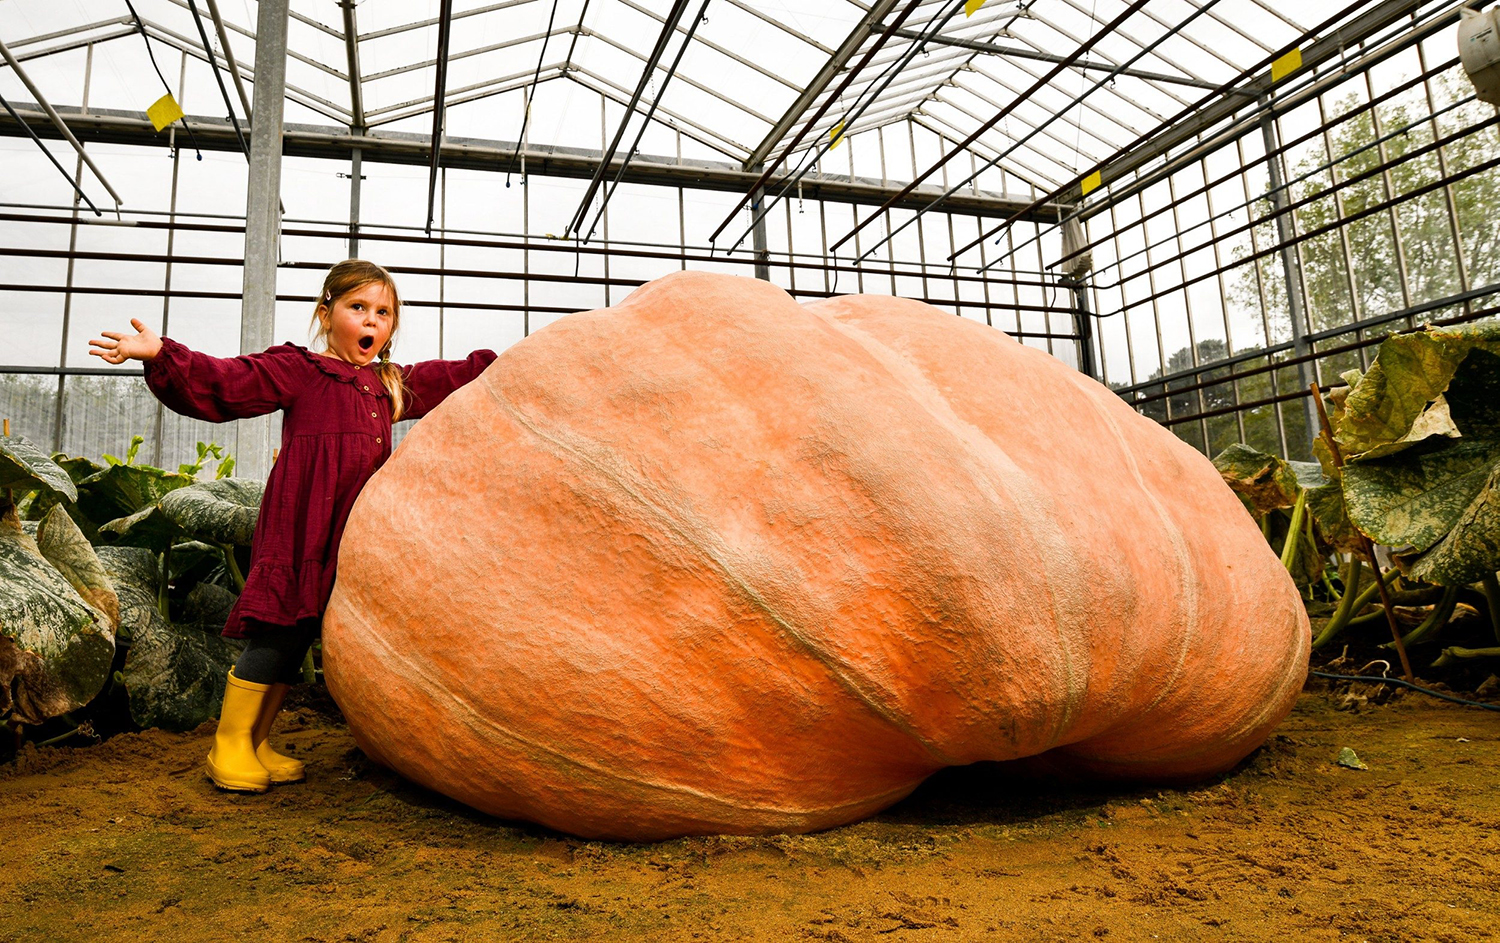 5.21 lb Vander Wielen Tomato Seed - Worldwide Giant Growers